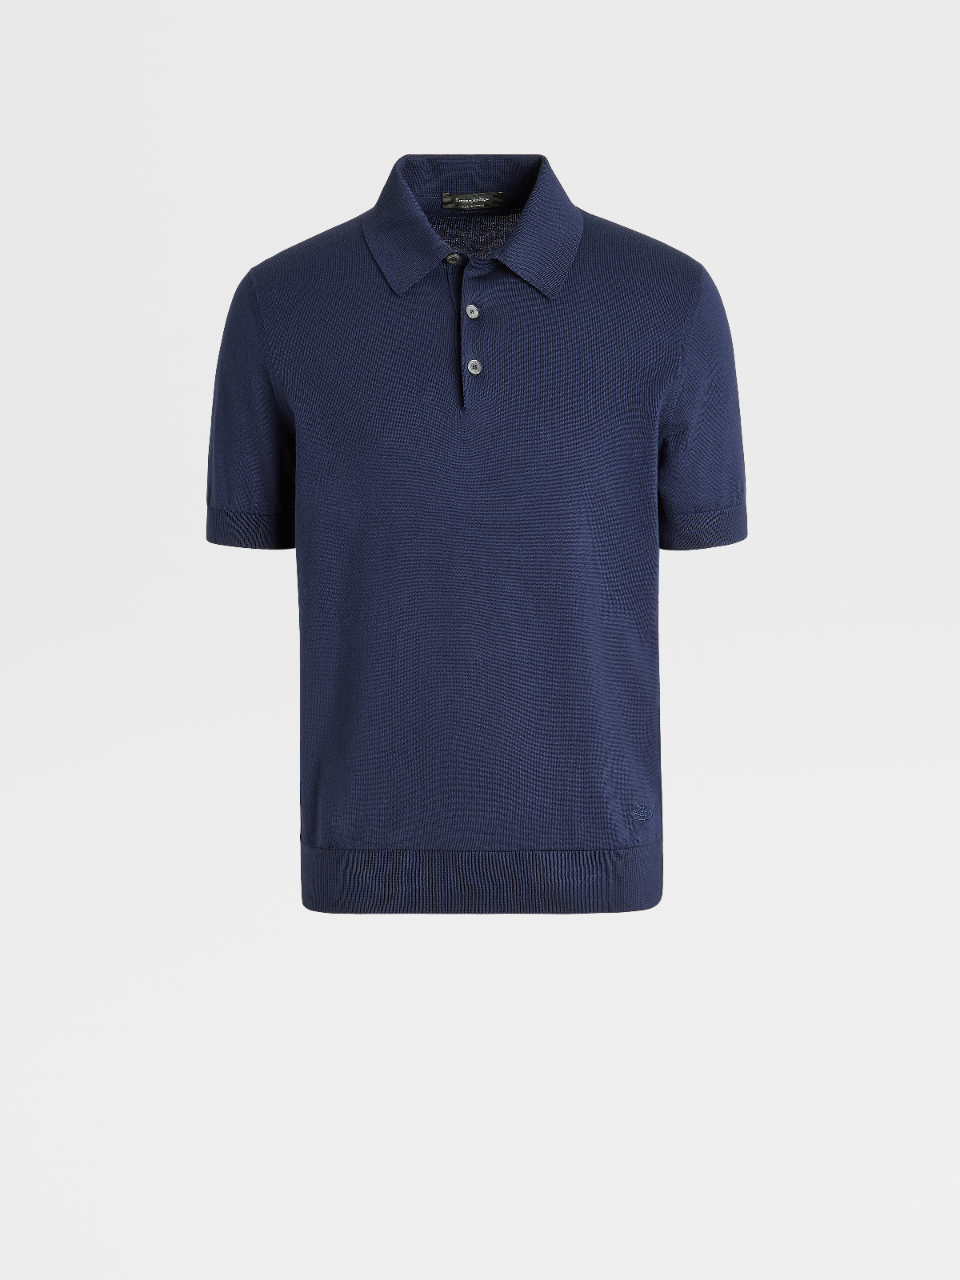 Navy Blue Premium Cotton knit Short-sleeve Polo